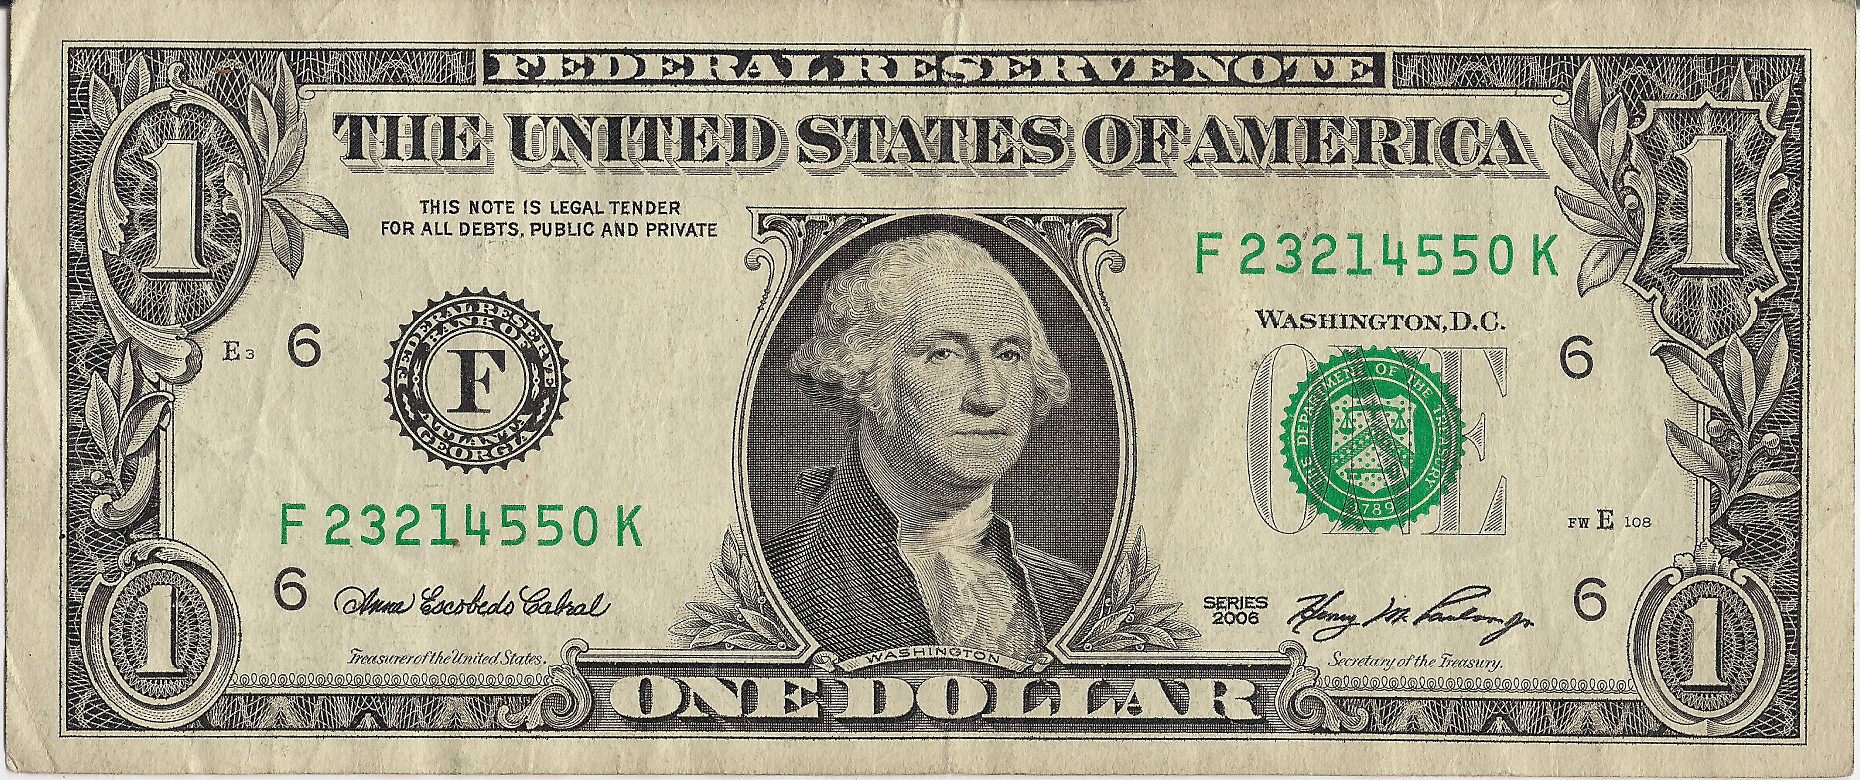 the twenty dollar bill of the united states of america